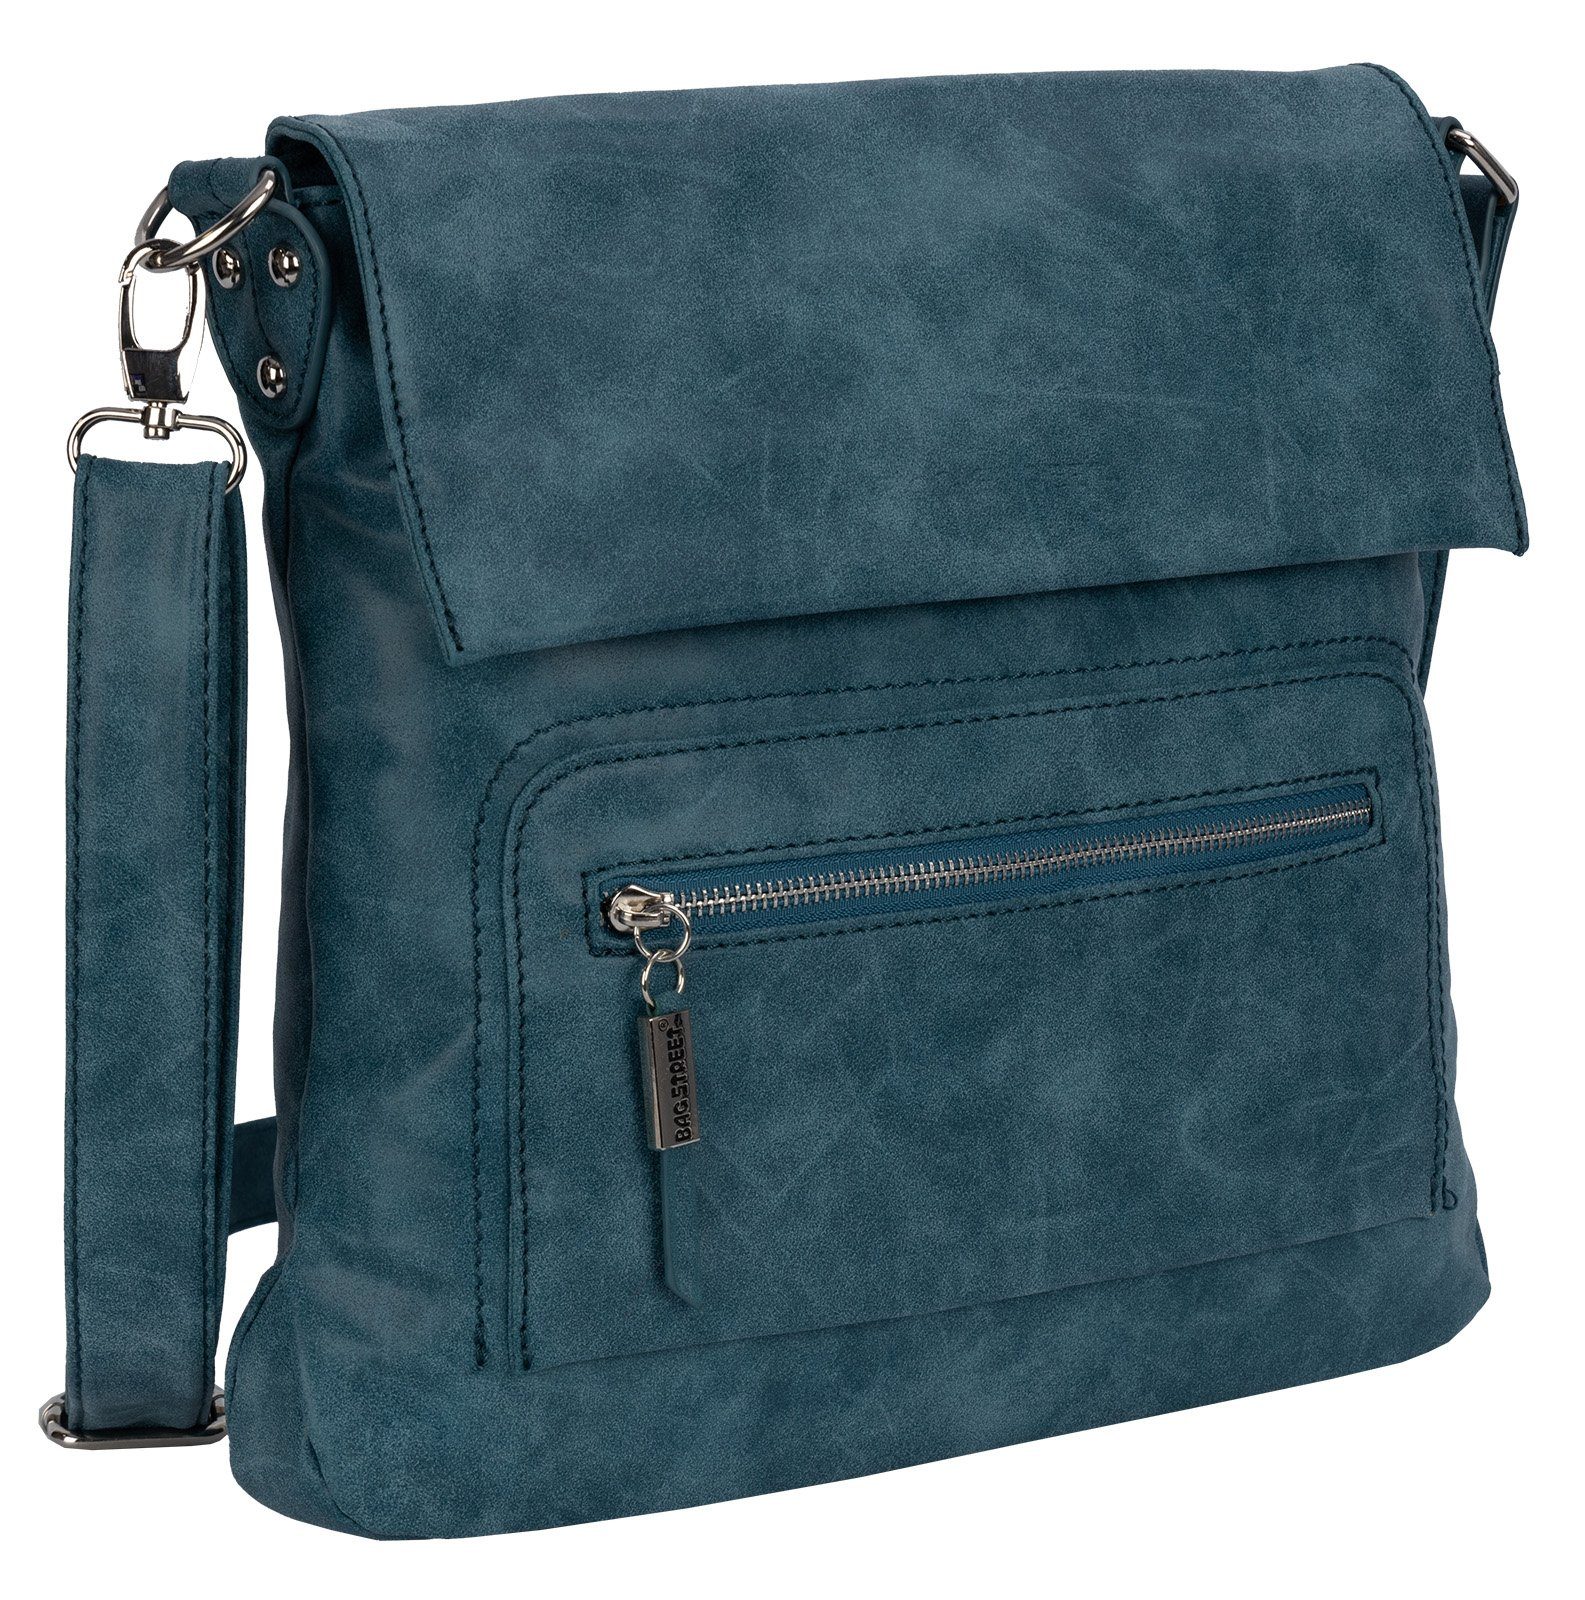 BAG STREET Schlüsseltasche Bag Street Damentasche Umhängetasche Handtasche Schultertasche T0103, als Schultertasche, Umhängetasche tragbar BLAU | Schlüsseltaschen